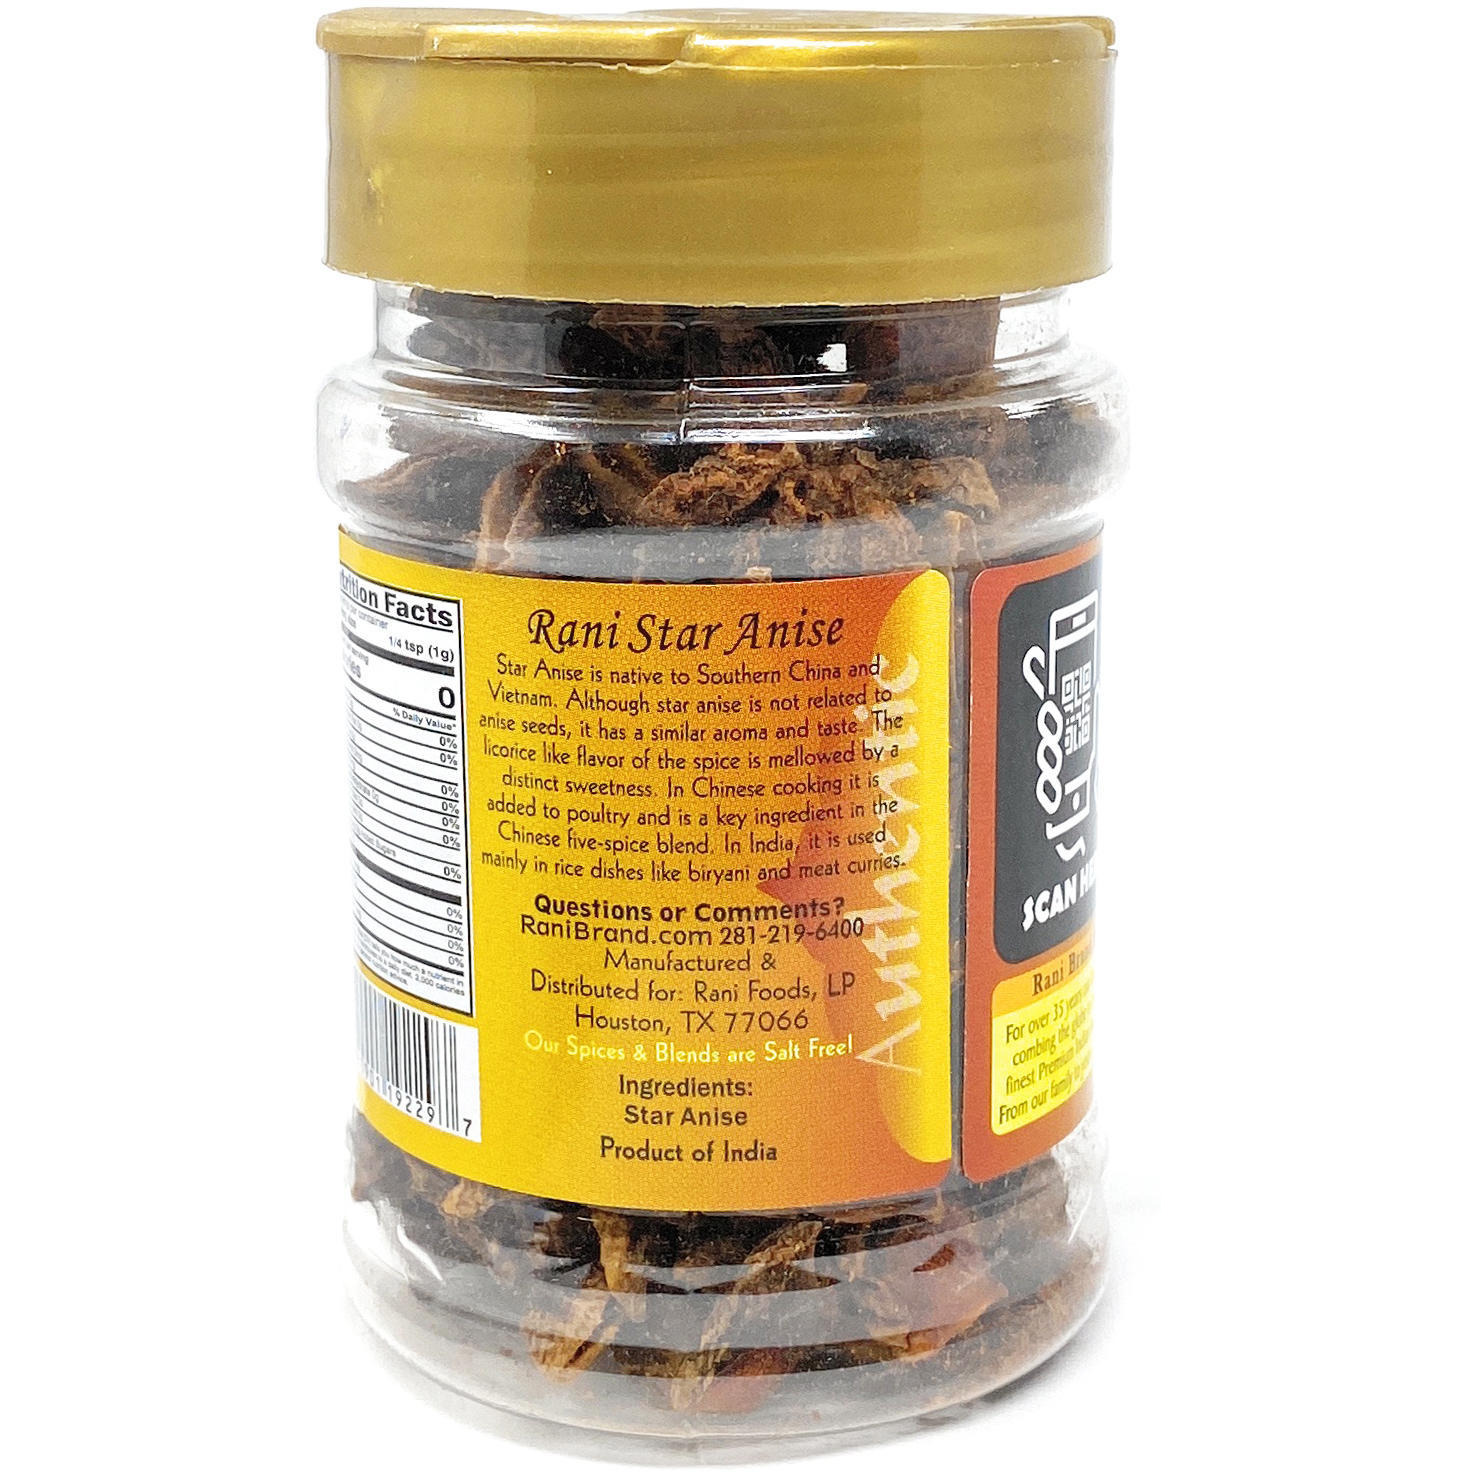 Rani Star Anise Seeds, Whole Pods (Badian Khatai) Spice 1.25oz (35g) PET Jar ~ All Natural ~ Gluten Friendly  | NON-GMO | Vegan | Indian Origin